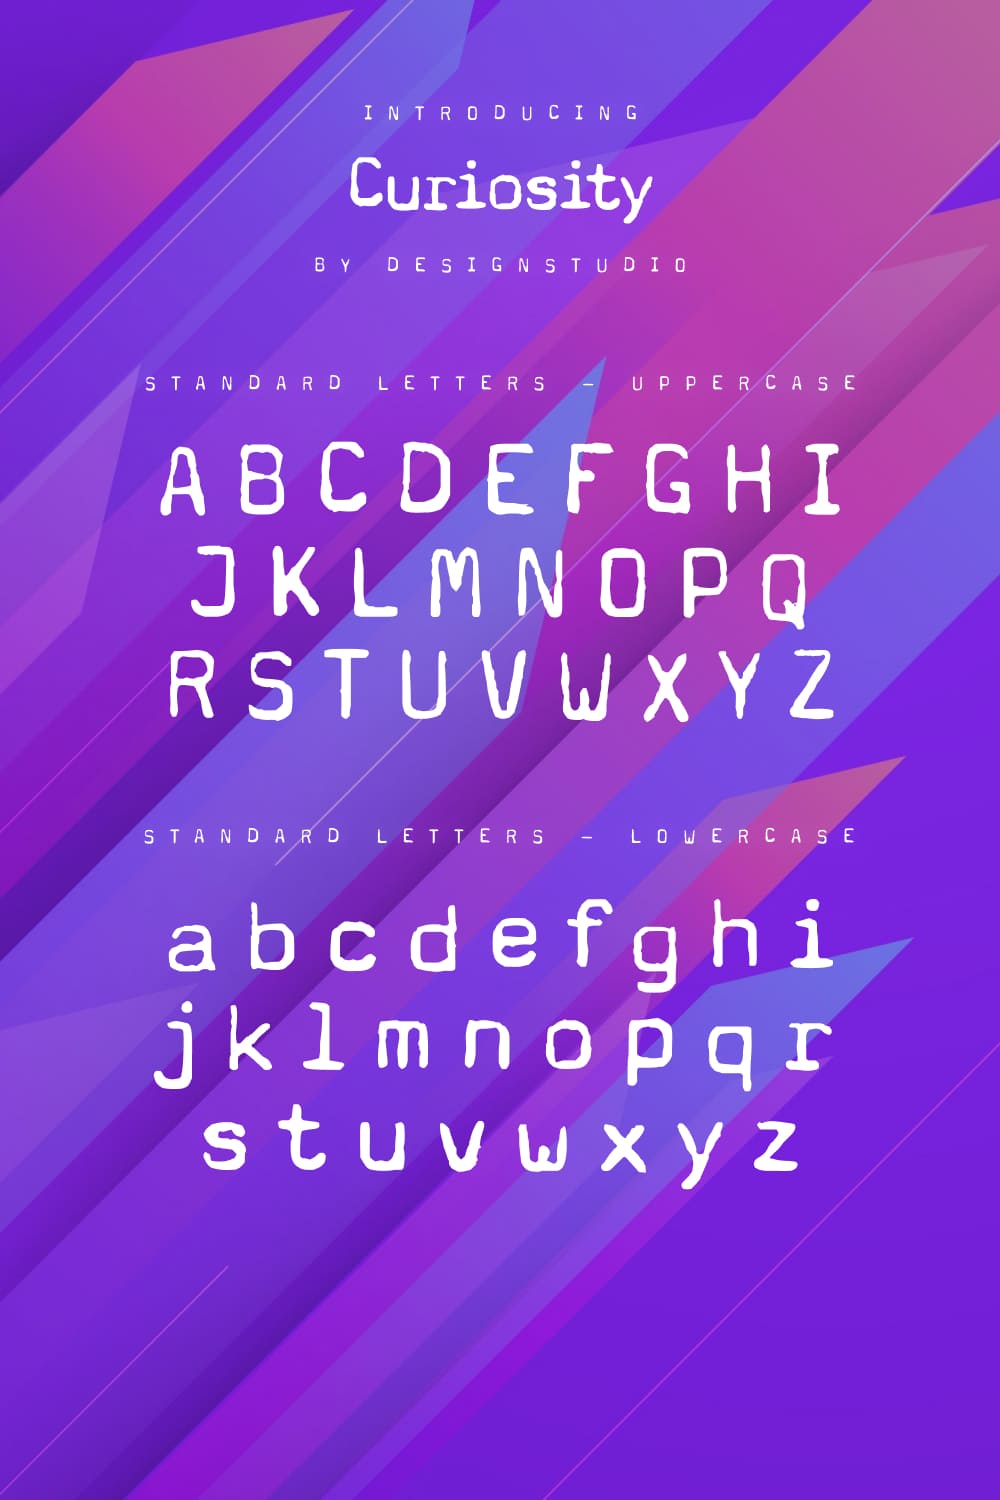 Curiosity Monospace Sans-Serif Font MasterBundles Pinterest Preview with lowercase and uppercase standart letters,